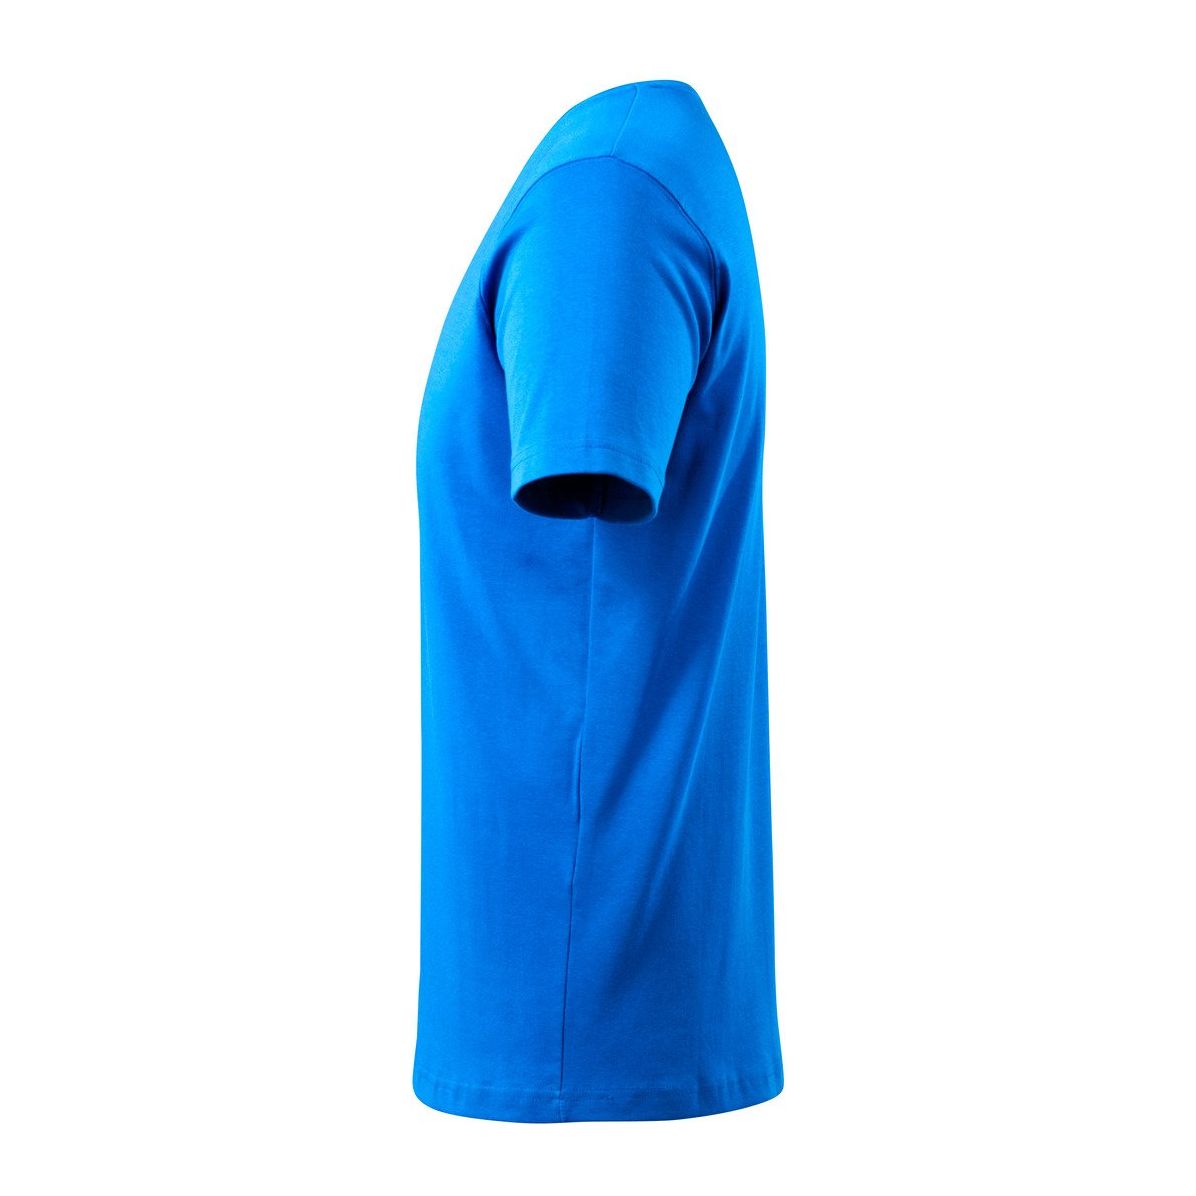 Mascot Vence T-shirt Slim-Fit Azure Blue 51585-967-91 Side